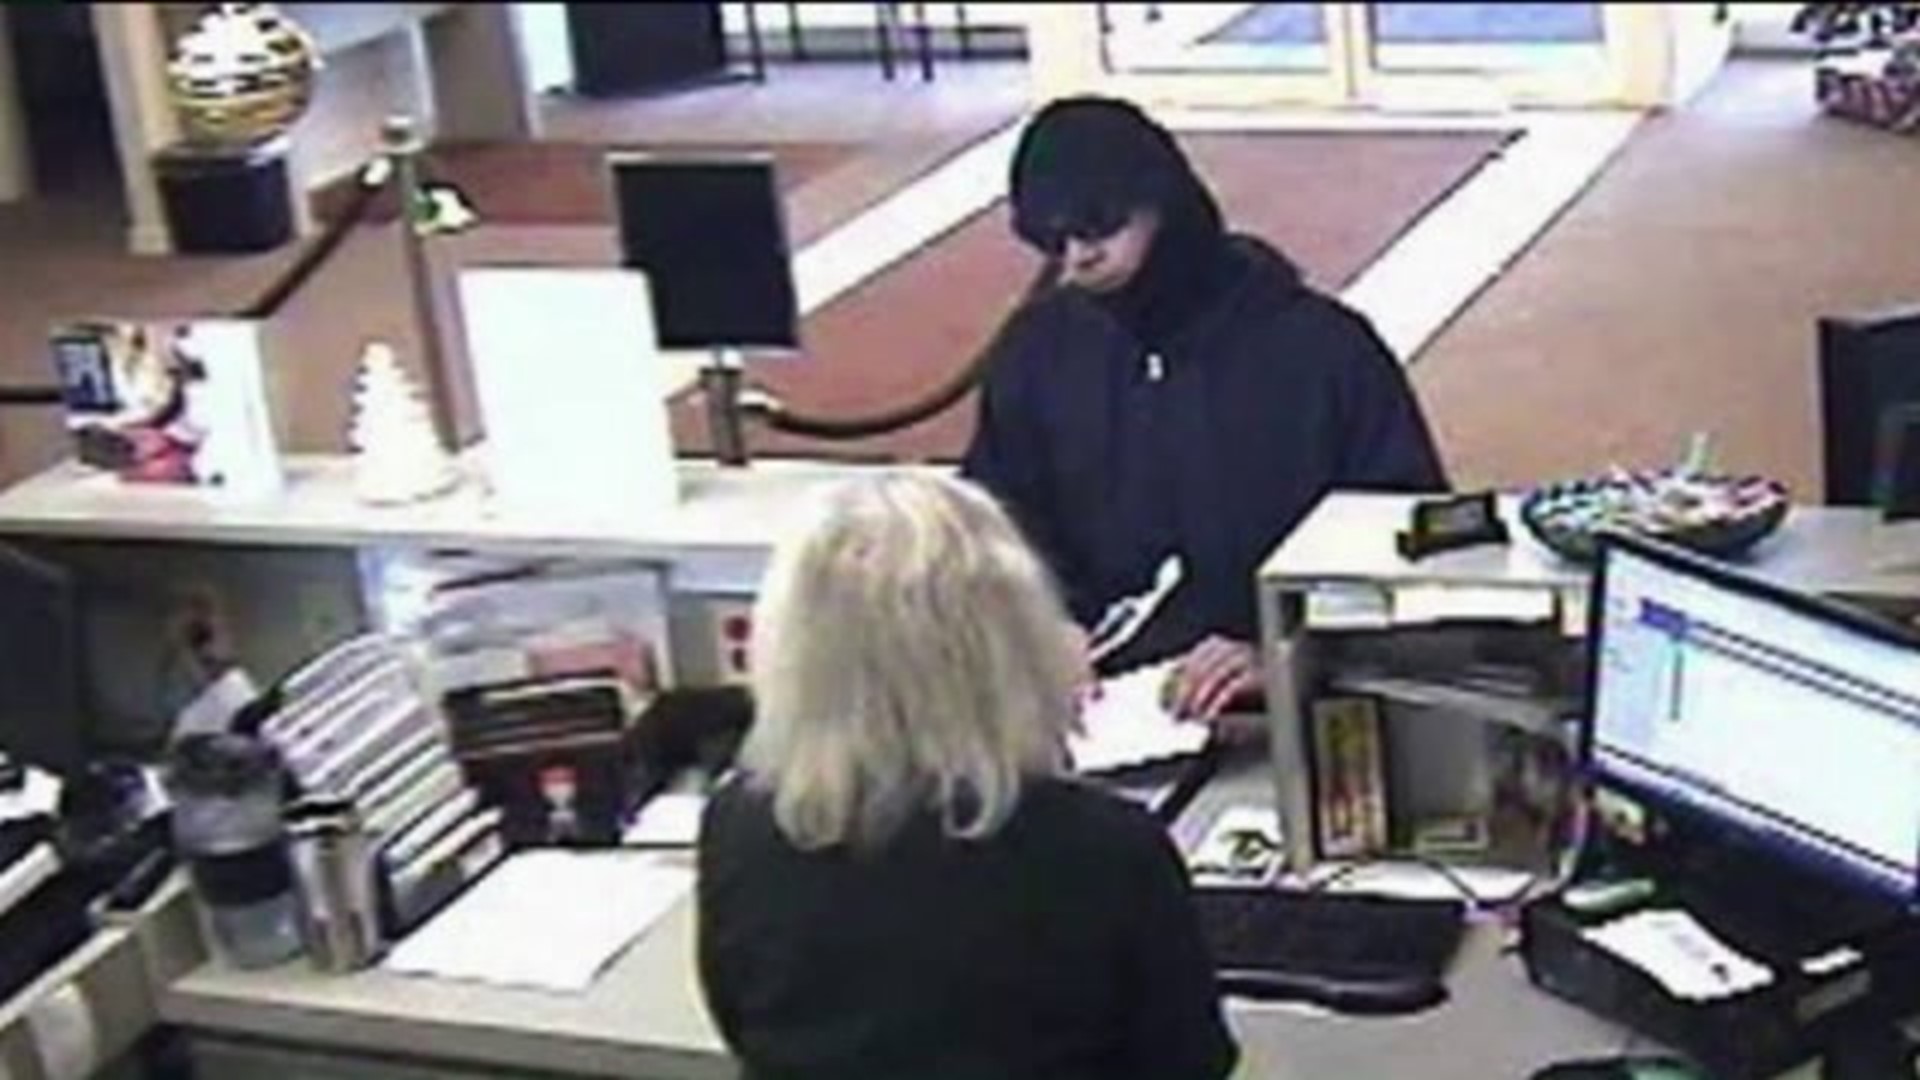 Bank Robbery Investigation in Scranton